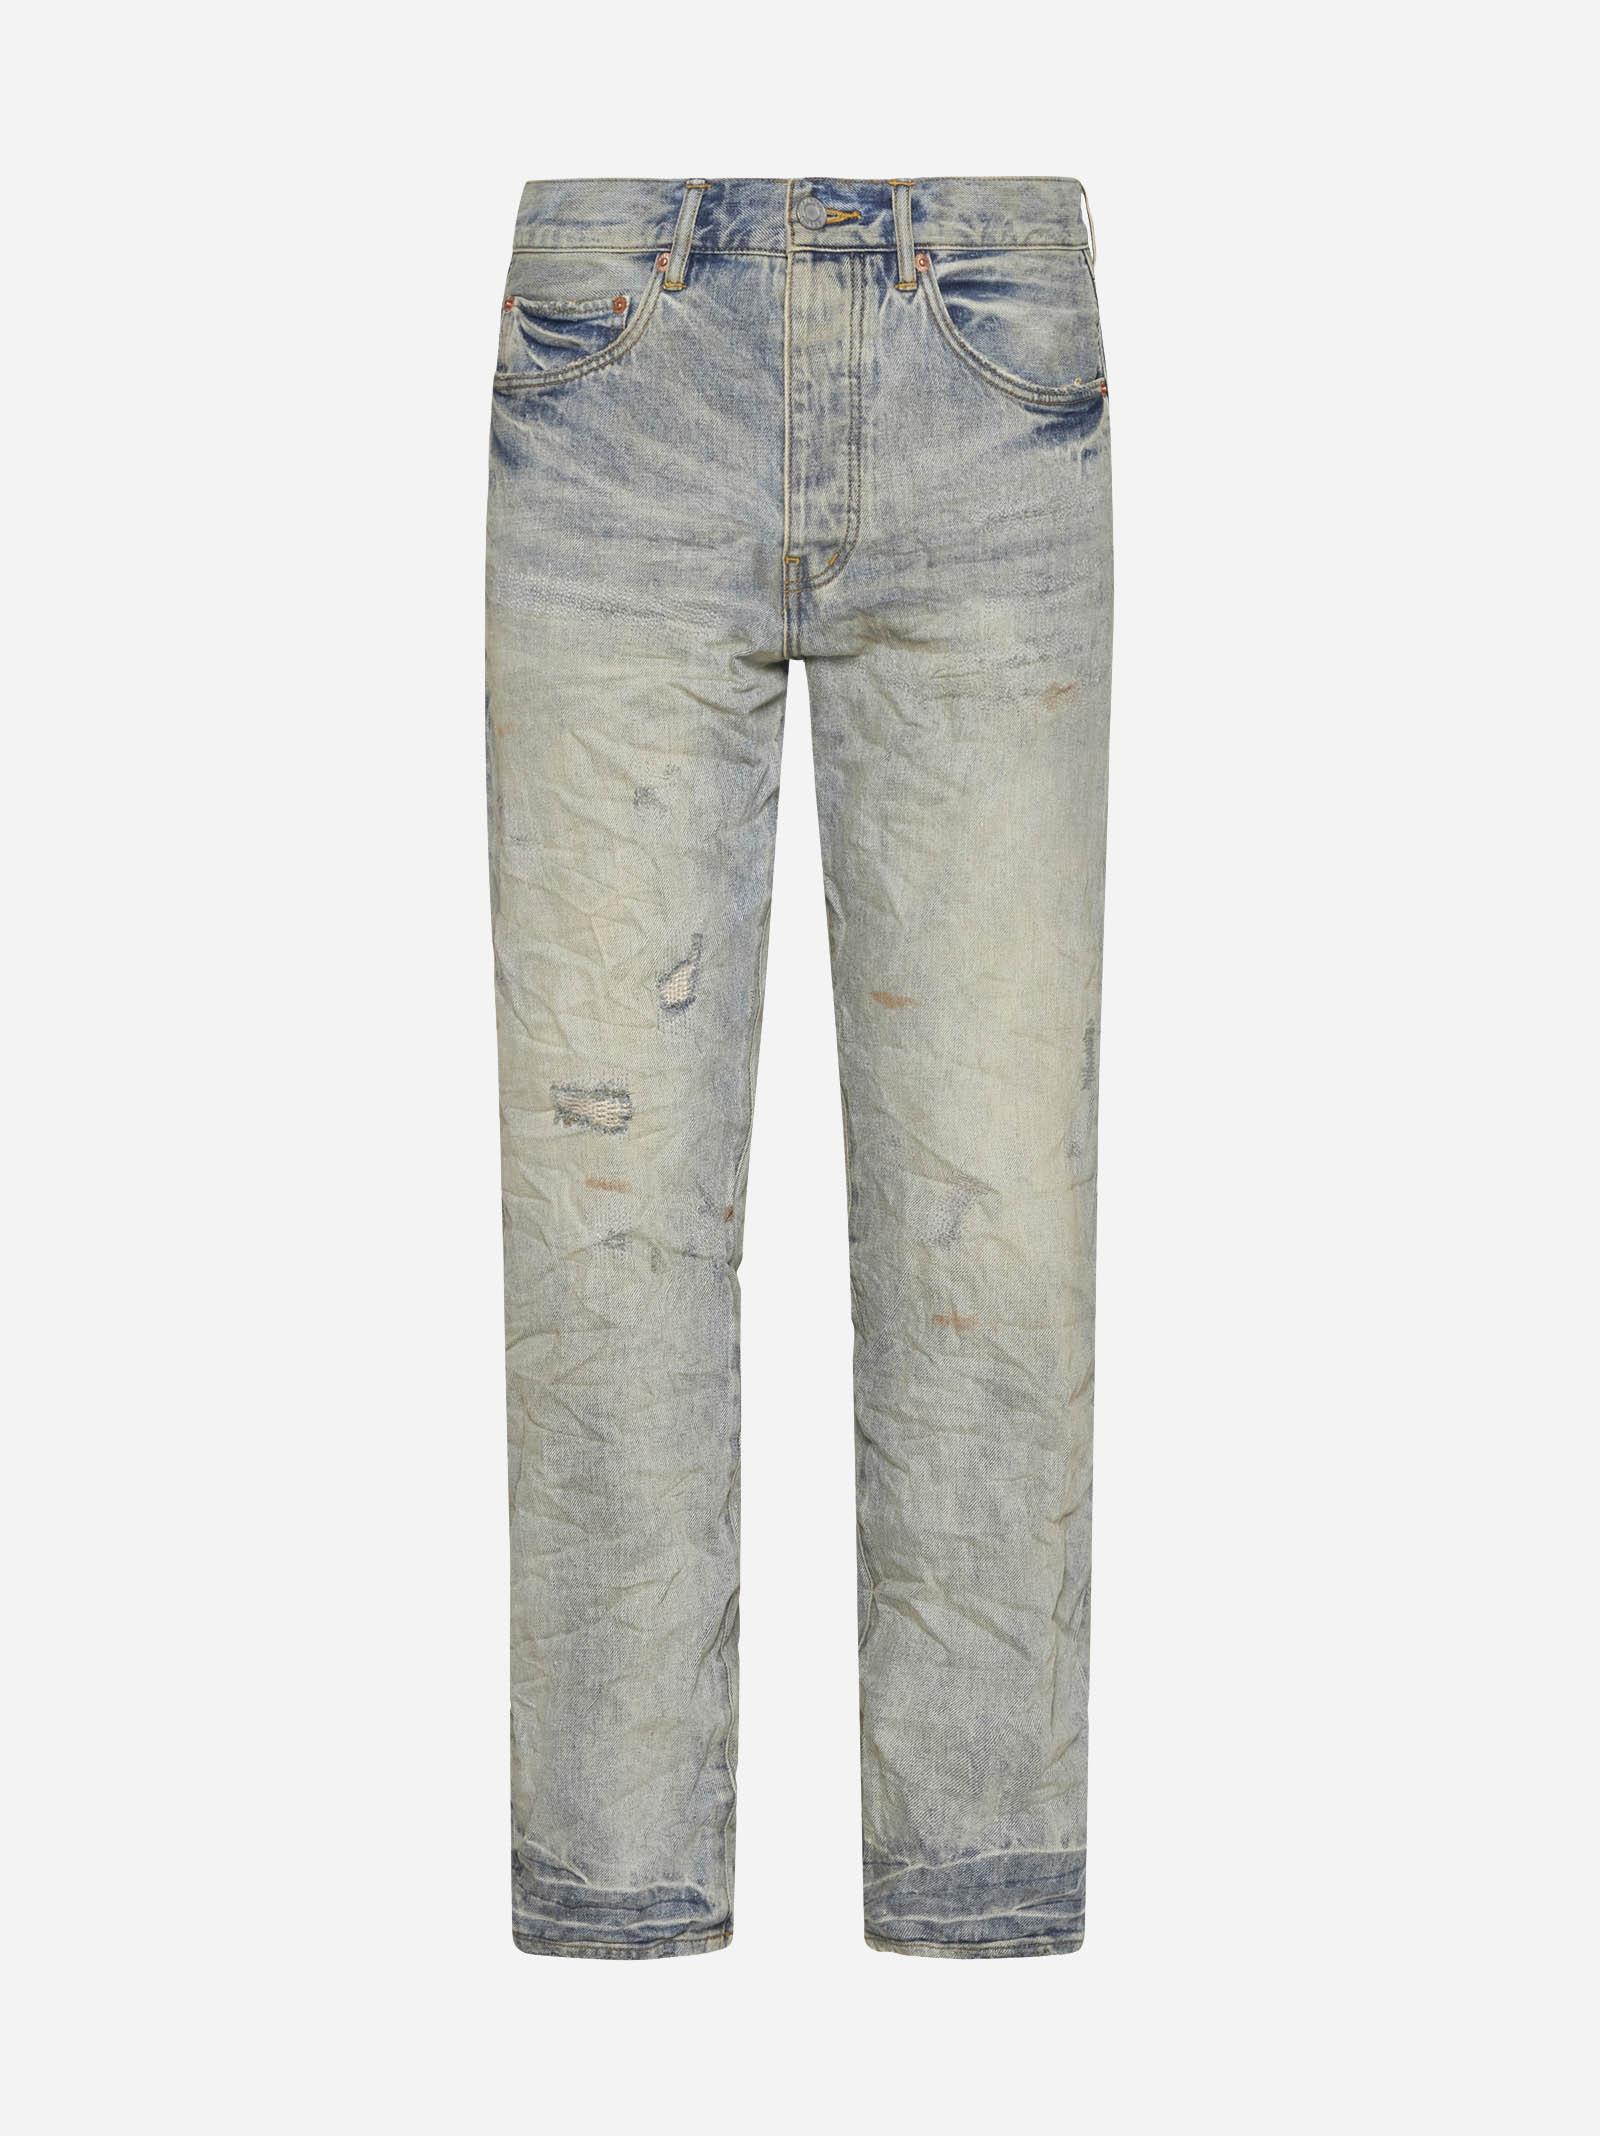 https://cdna.lystit.com/photos/danielloboutique/0c5edfcb/purple-brand-Super-light-indigo-oil-repair-Jeans-loose-fit.jpeg